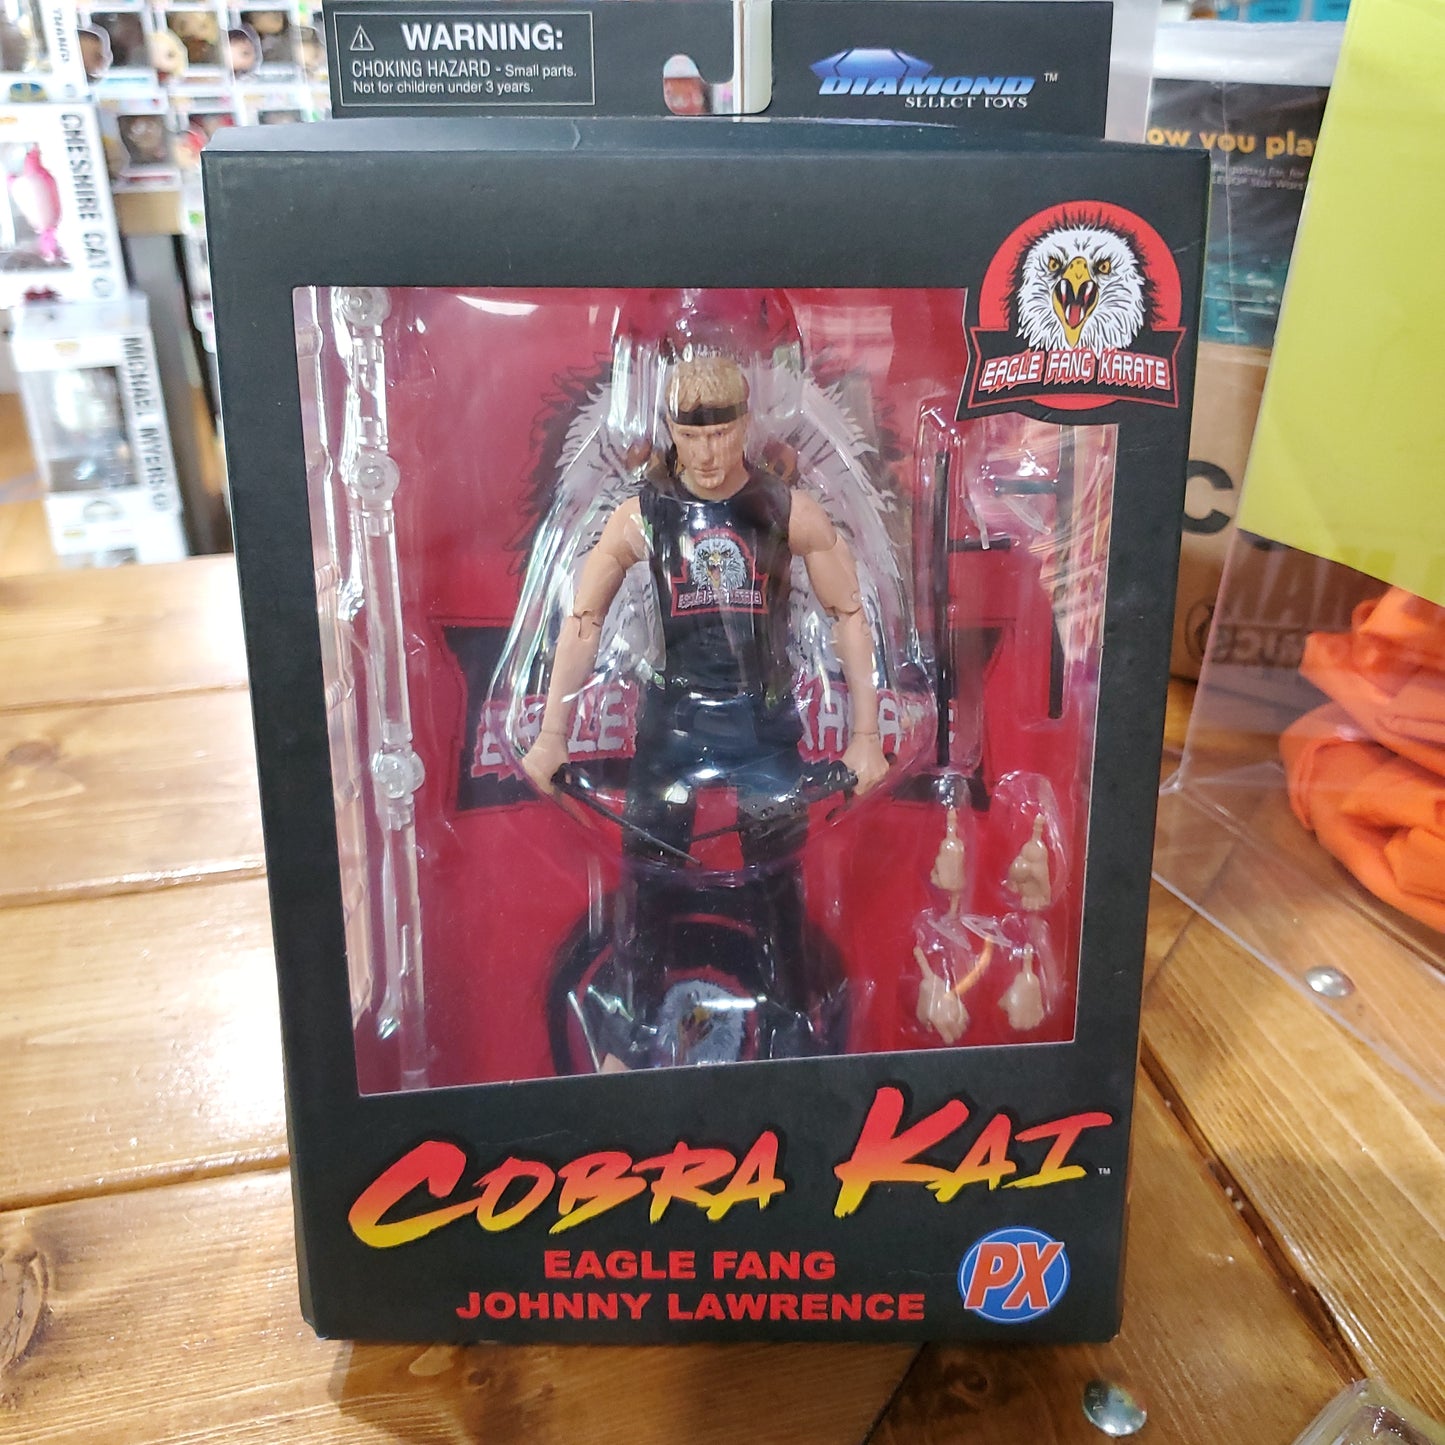 Cobra Kai - Eagle Fang Johnny Lawrence - Diamond Select Action Figure